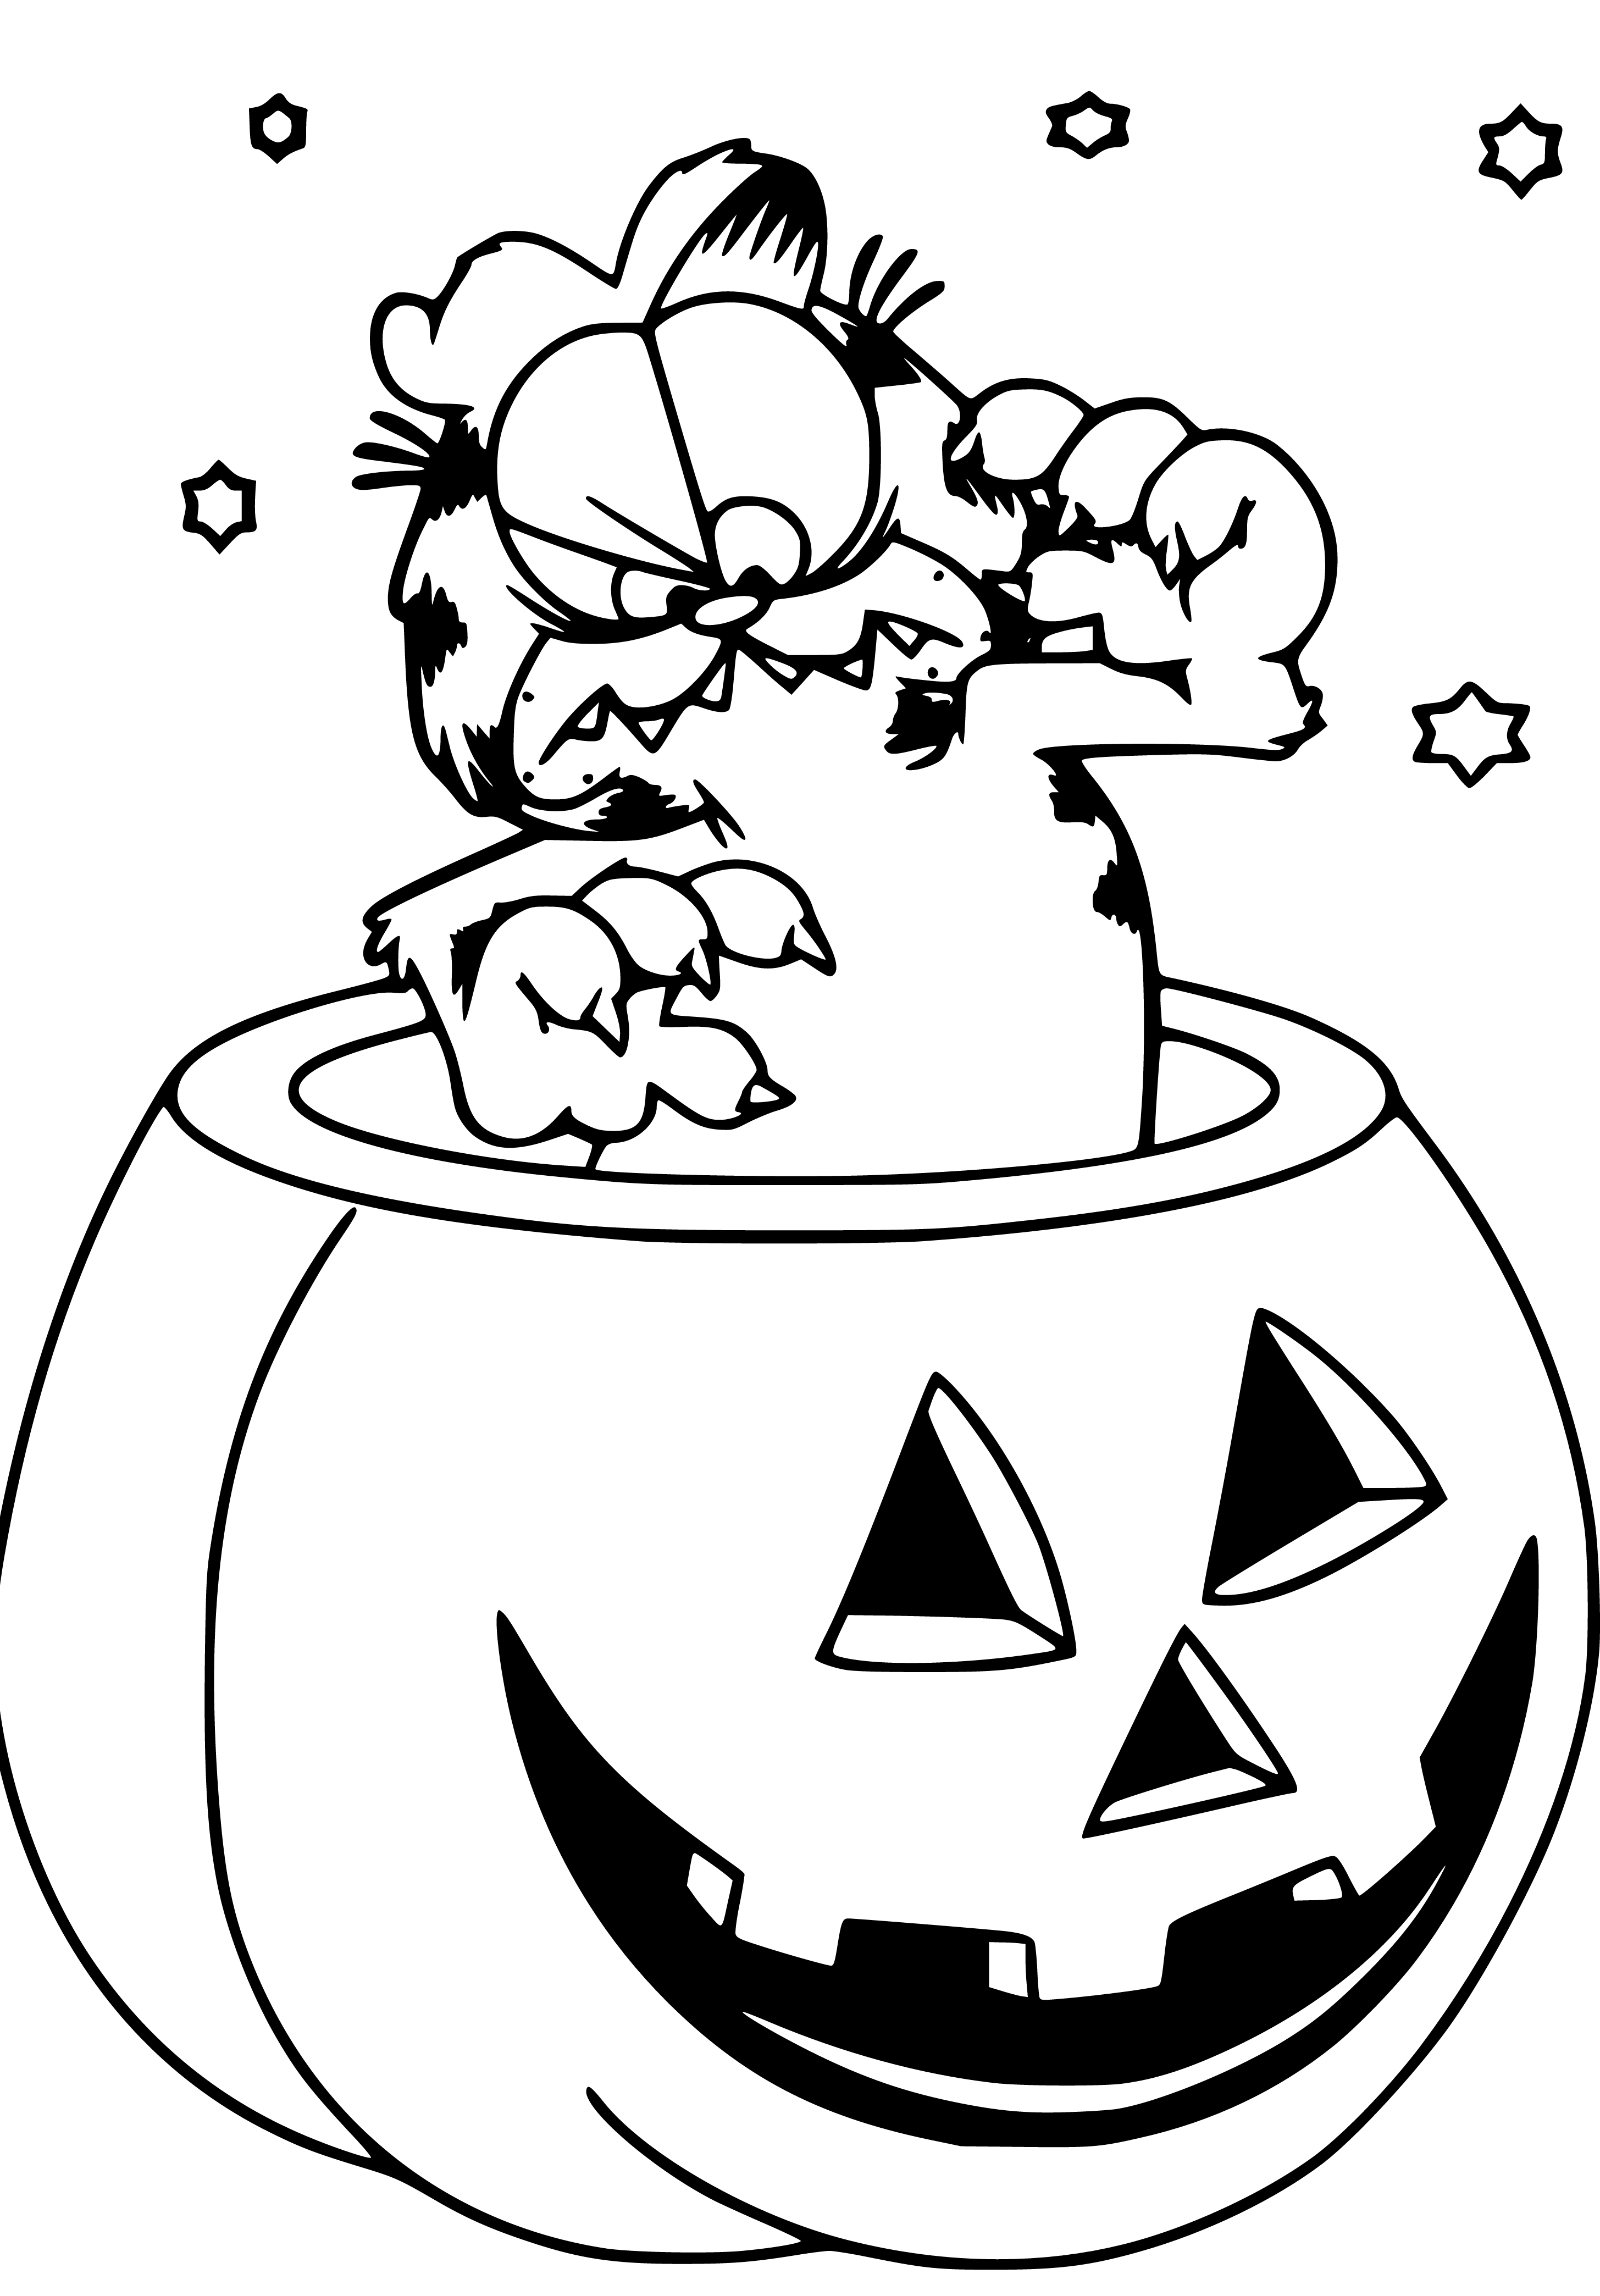 Garfield Halloween Coloring Page for kids - SheetalColor.com